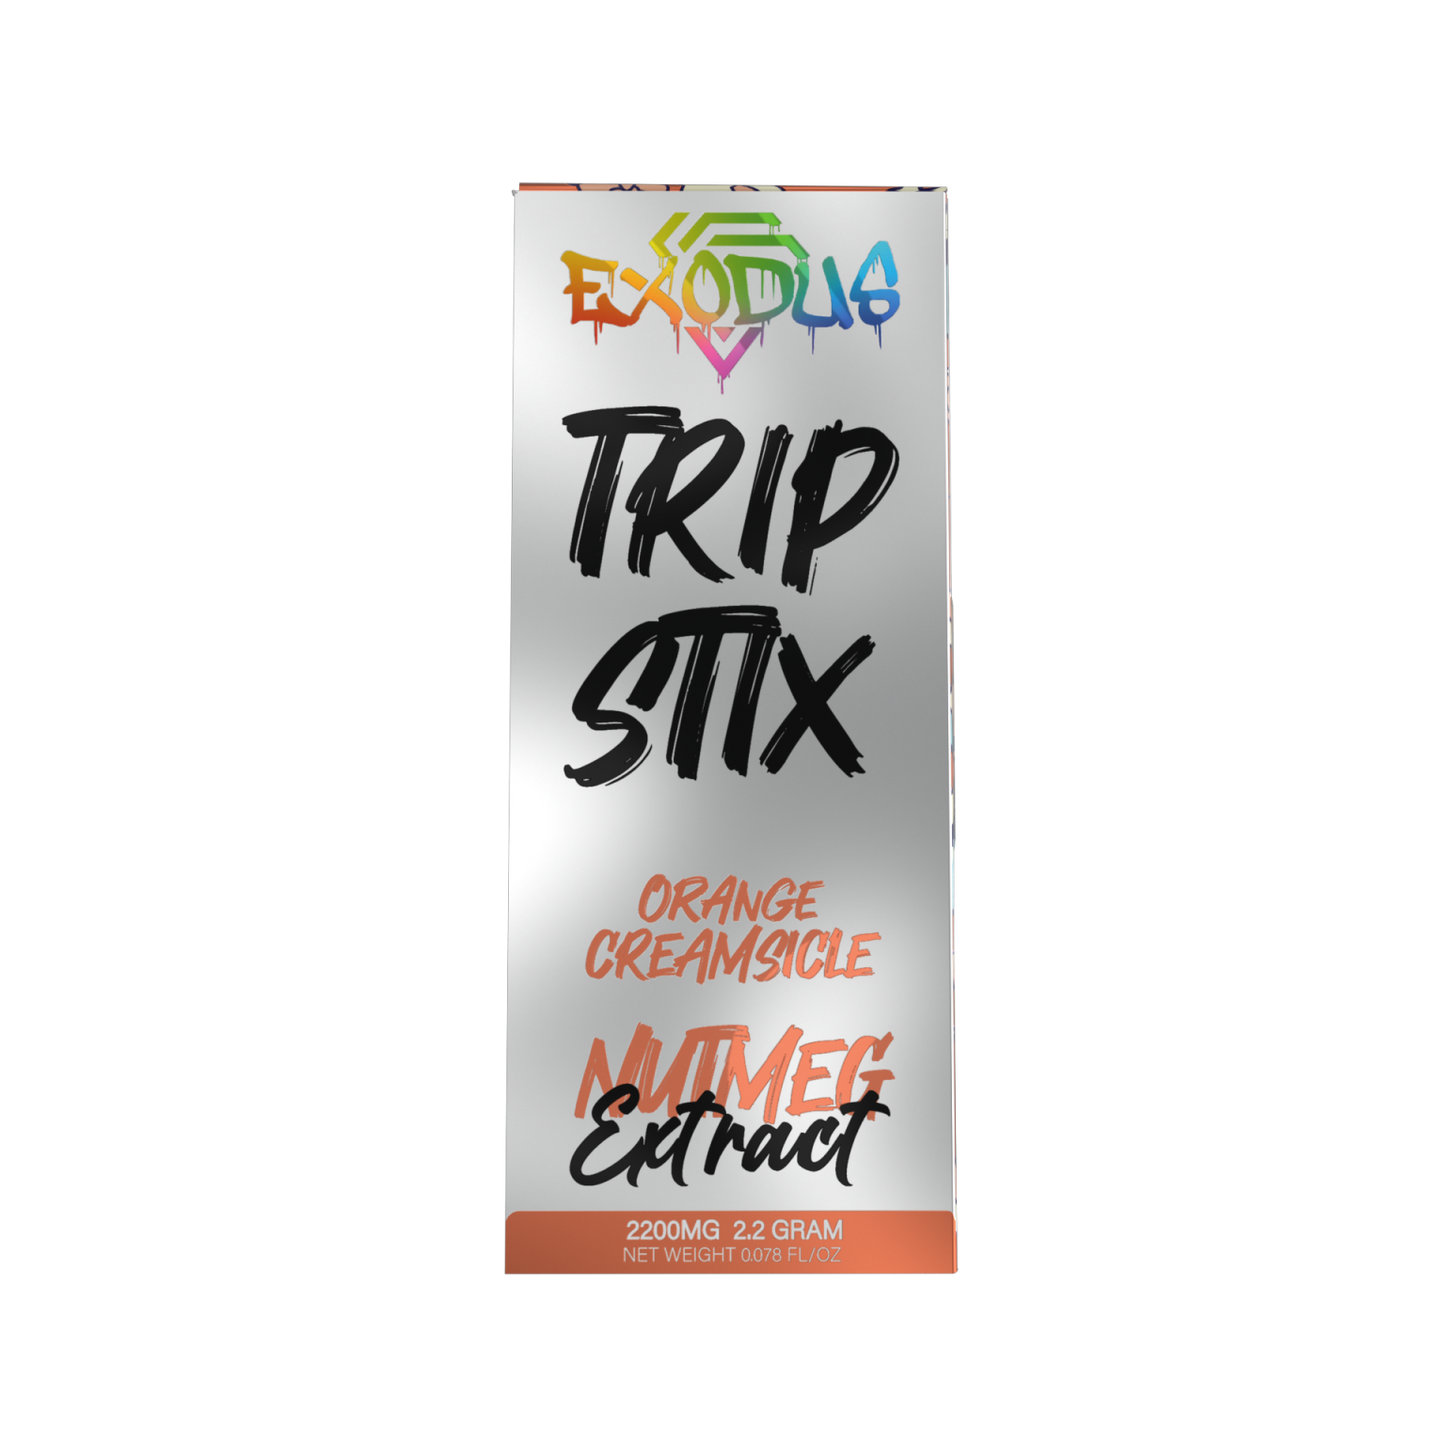 Exodus Trip Stix Orange Creamsicle 2.2G